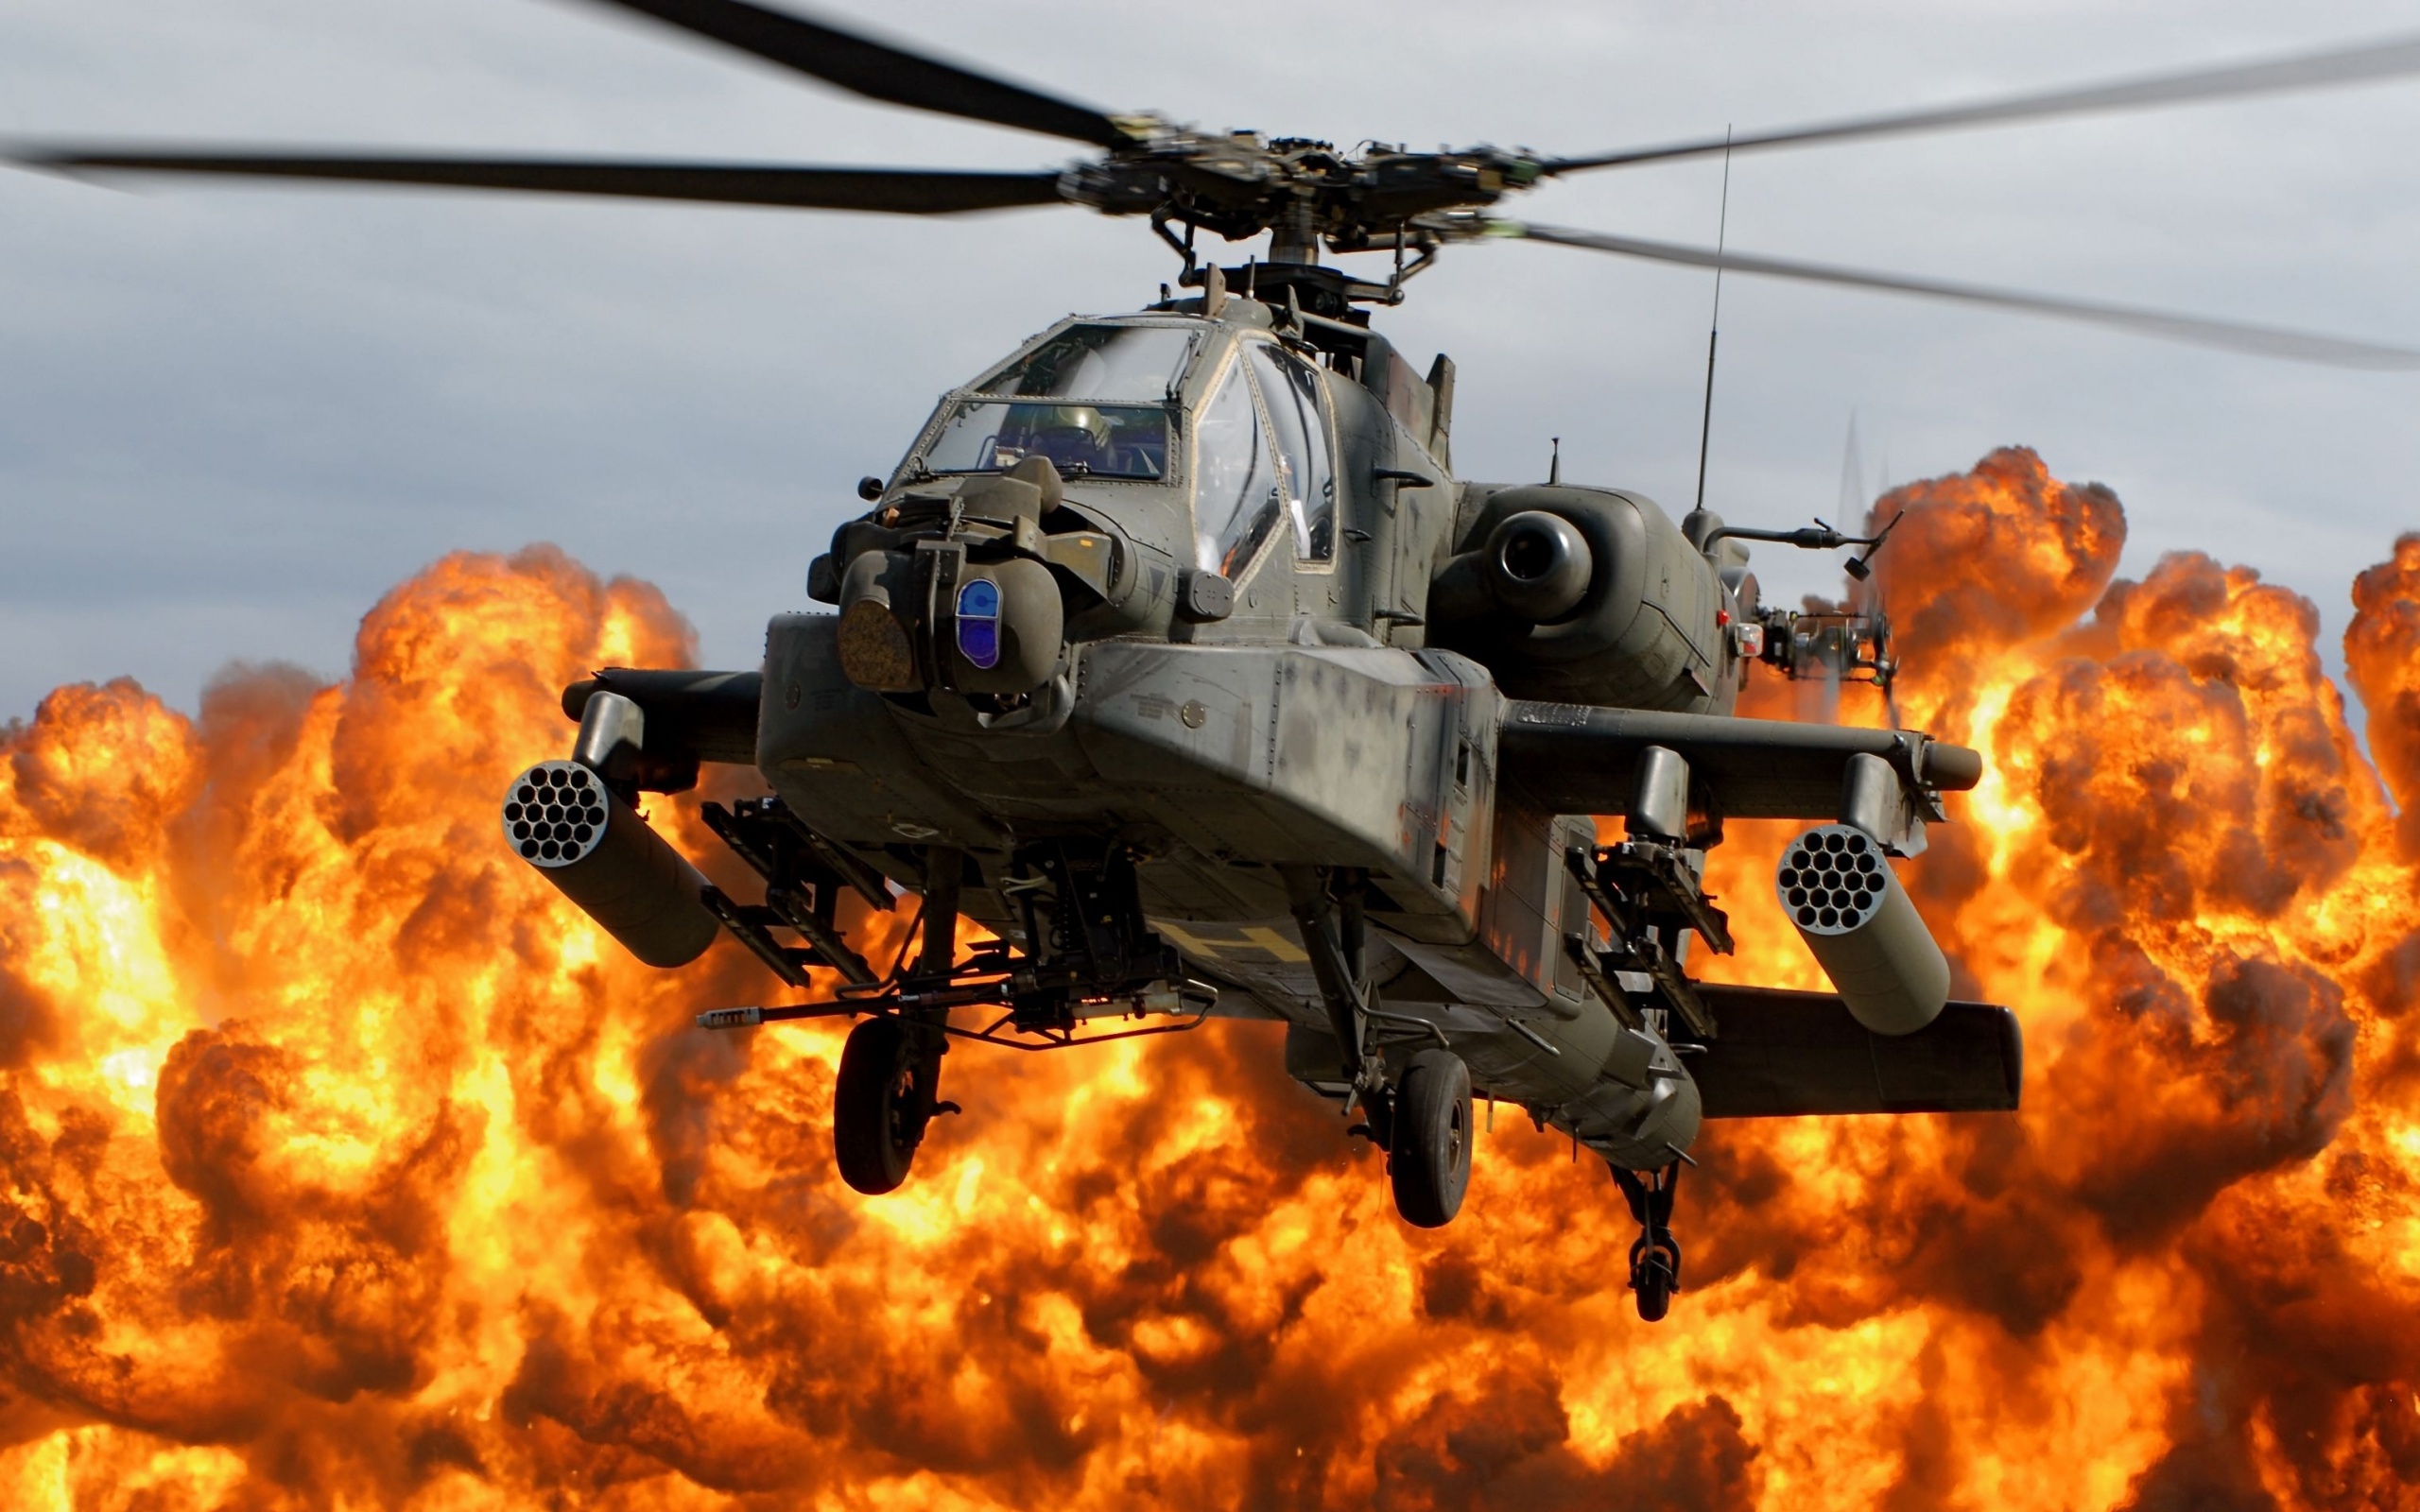 Descarga gratuita de fondo de pantalla para móvil de Militar, Boeing Ah 64 Apache.